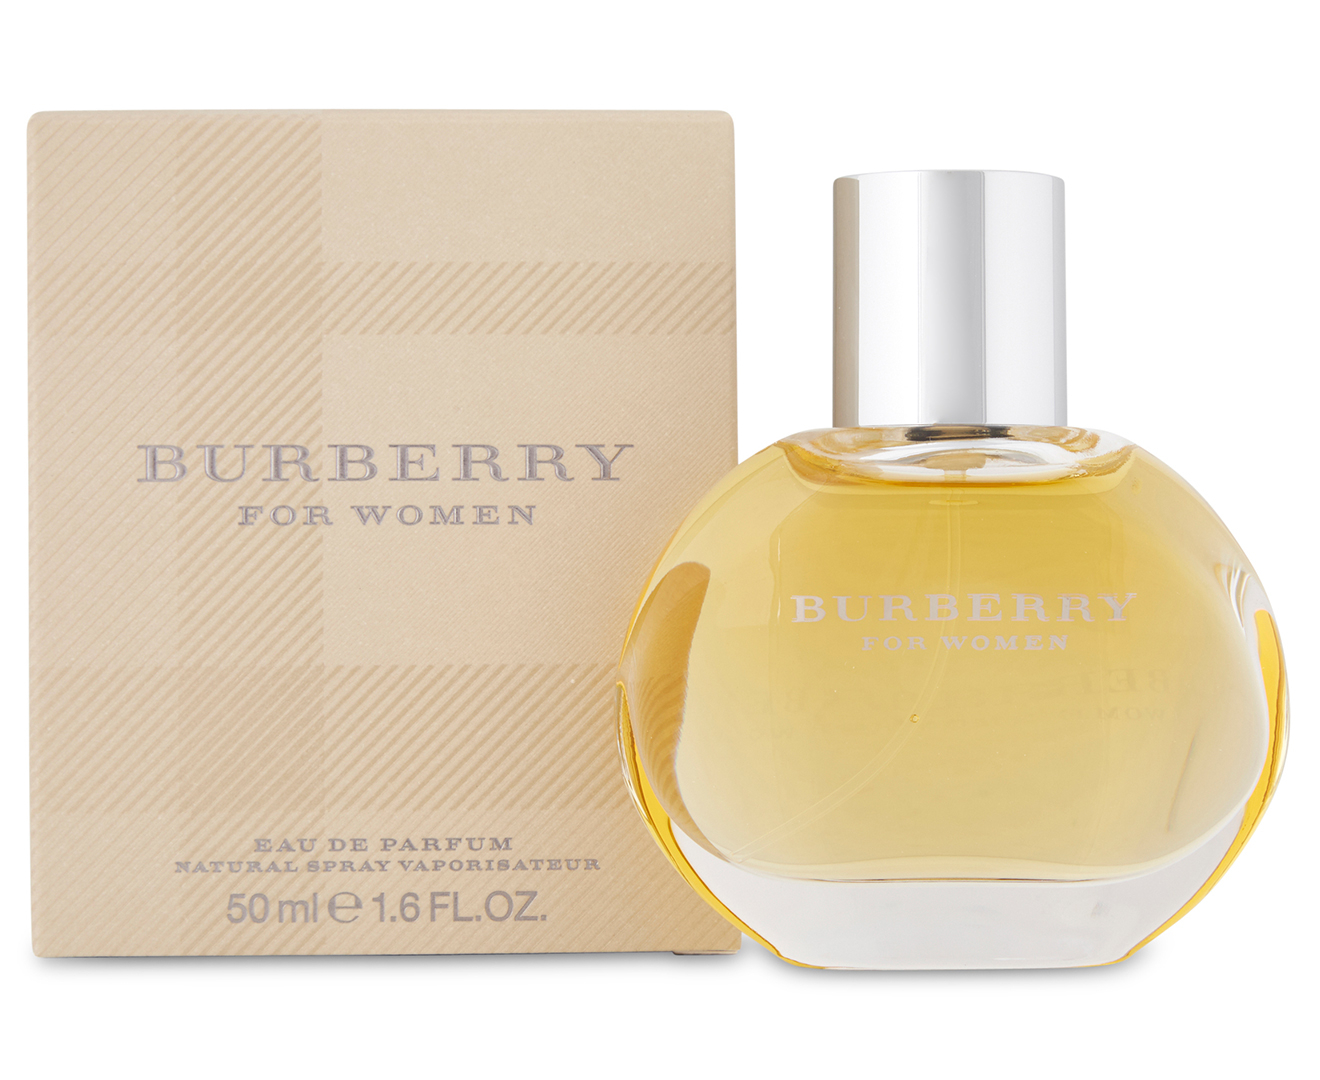 Burberry For Women EDP Perfume 50mL 